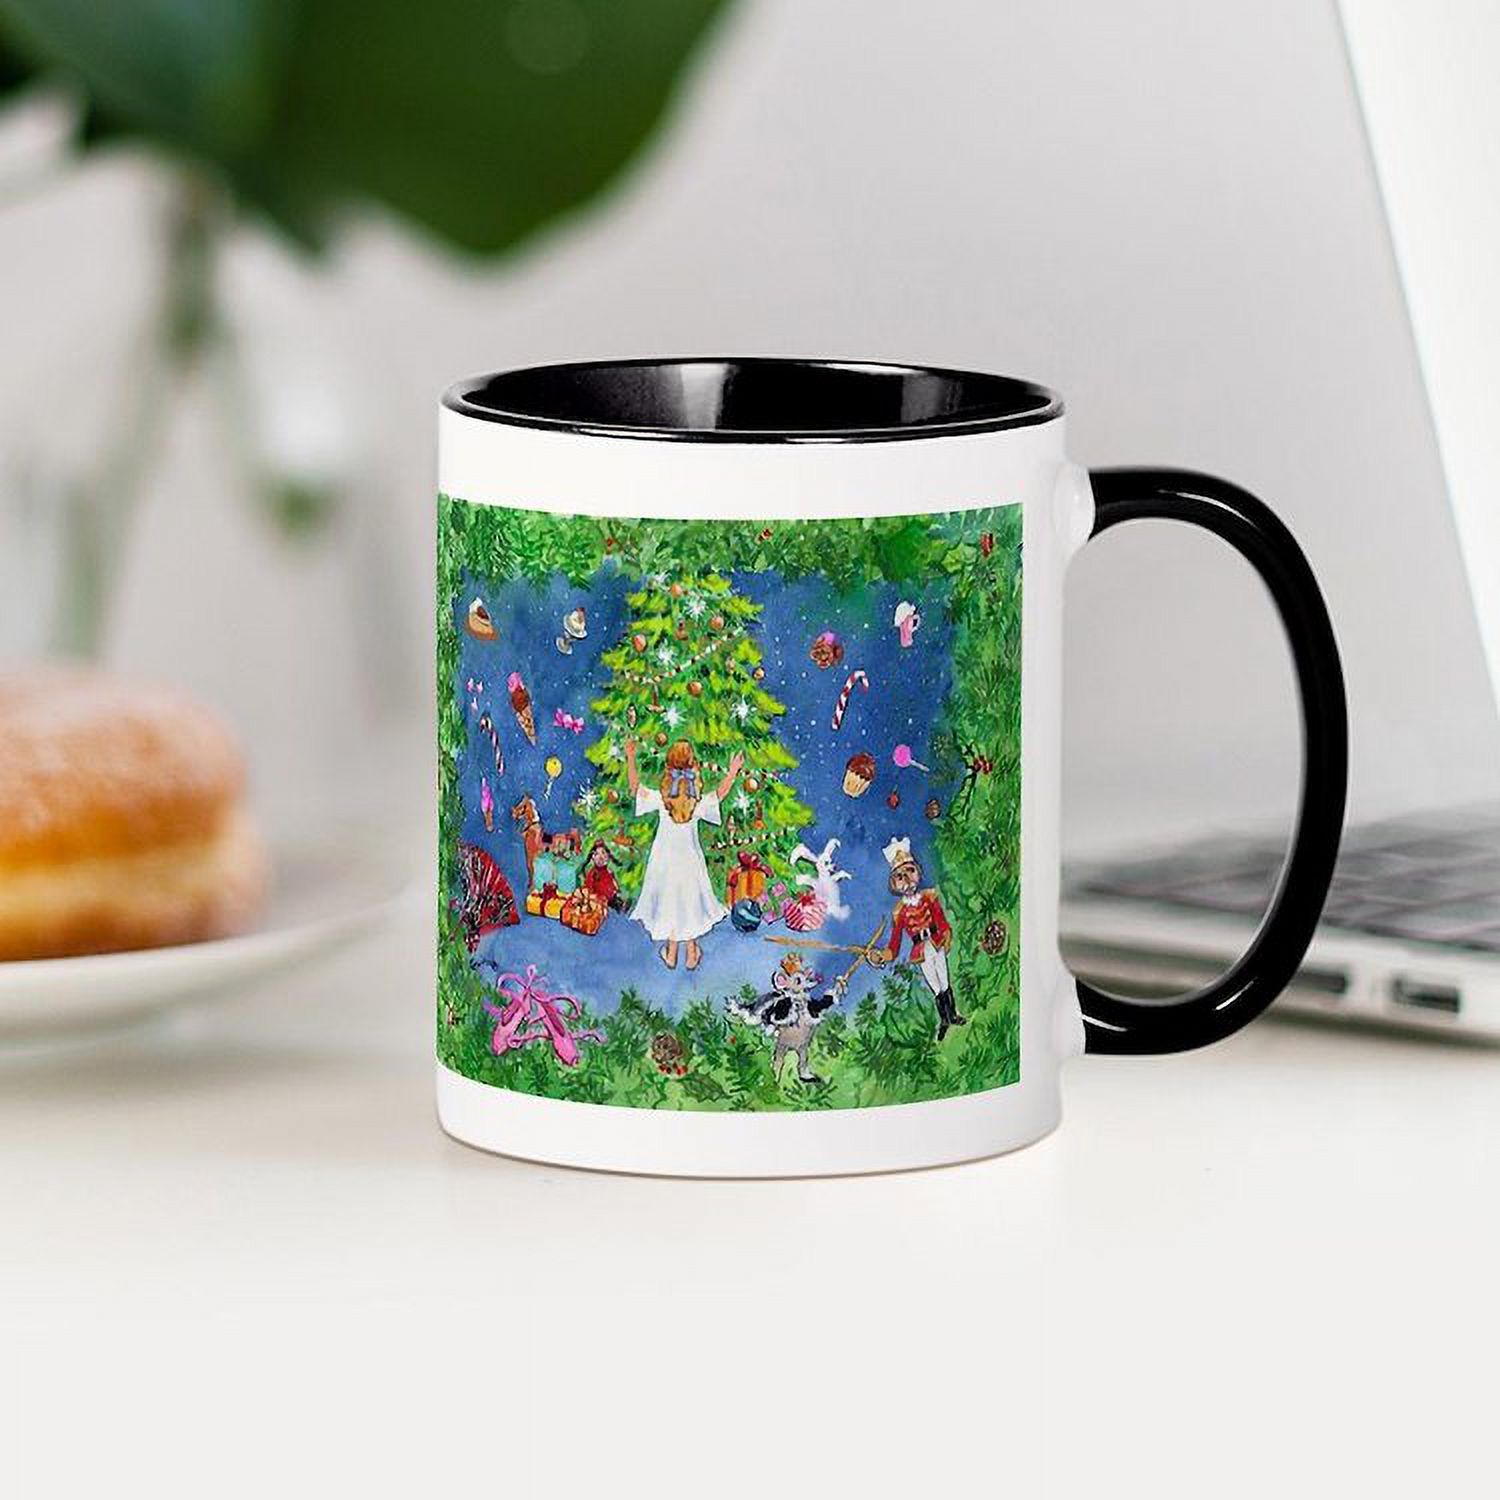 CafePress - Nutcracker Christmas Ballet Mug - 11 oz Ceramic Mug - Novelty Coffee Tea Cup - image 3 of 4